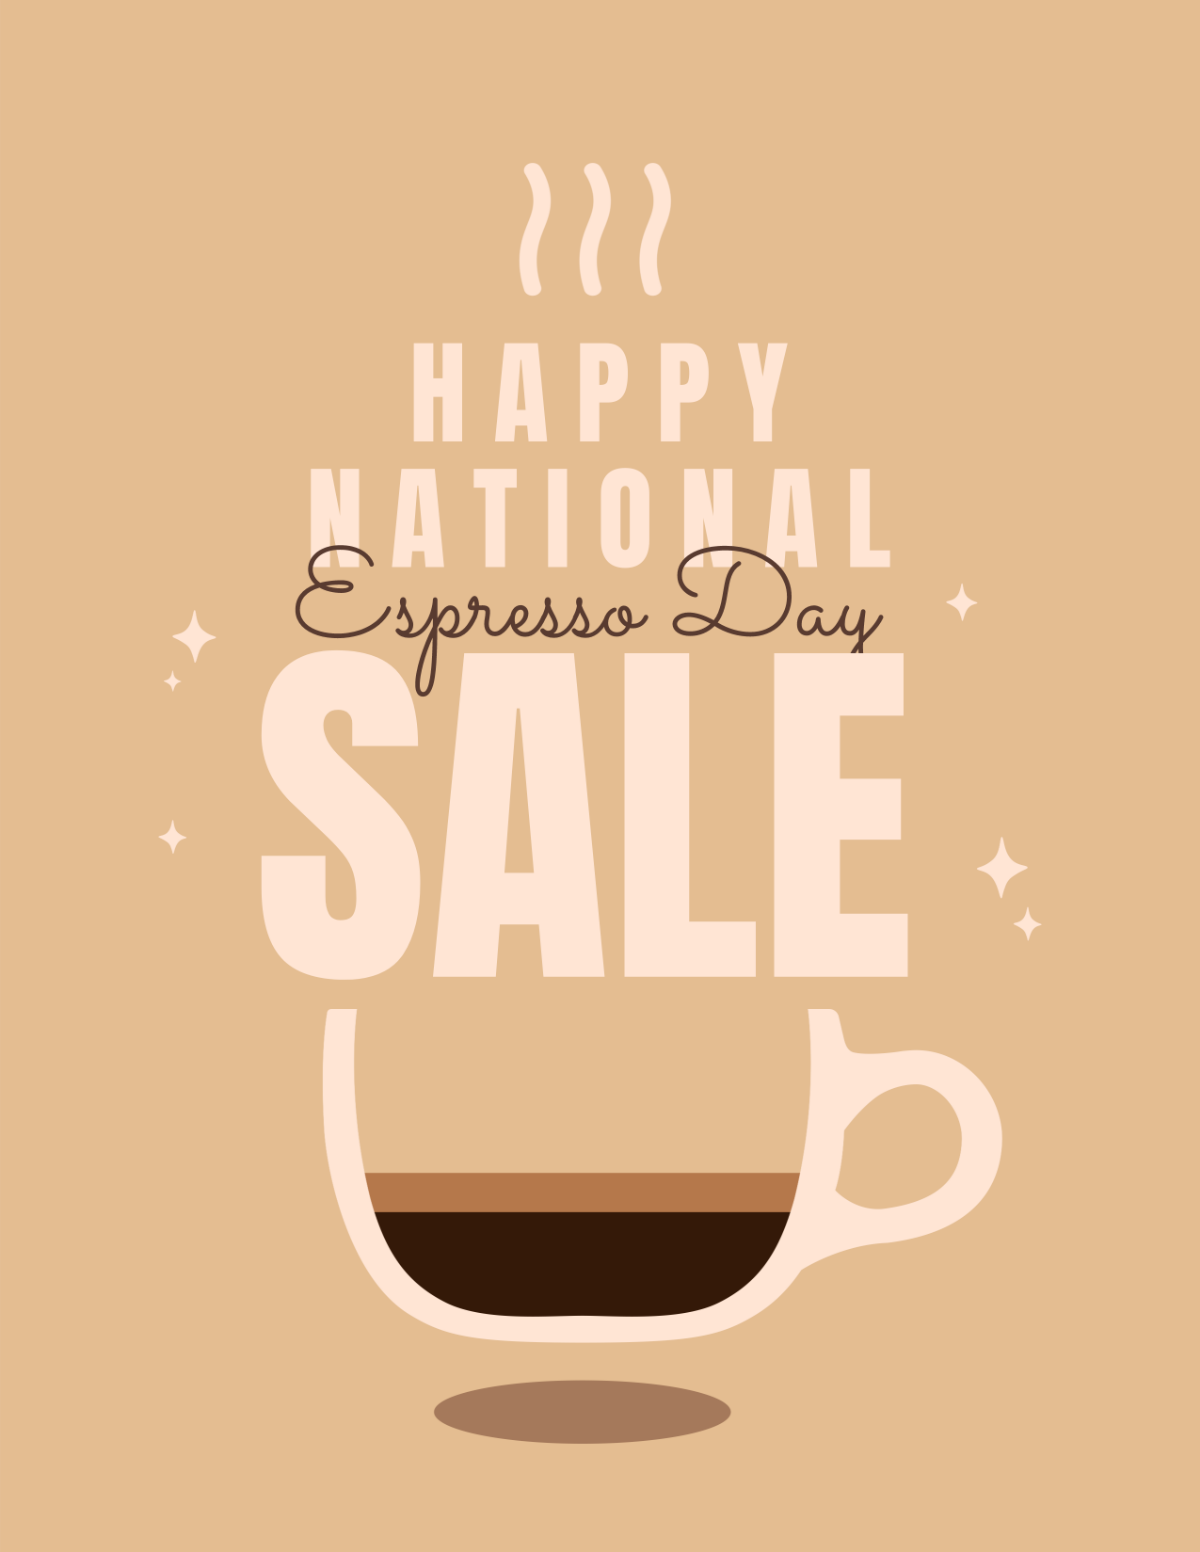 National Espresso Day Sales Flyer